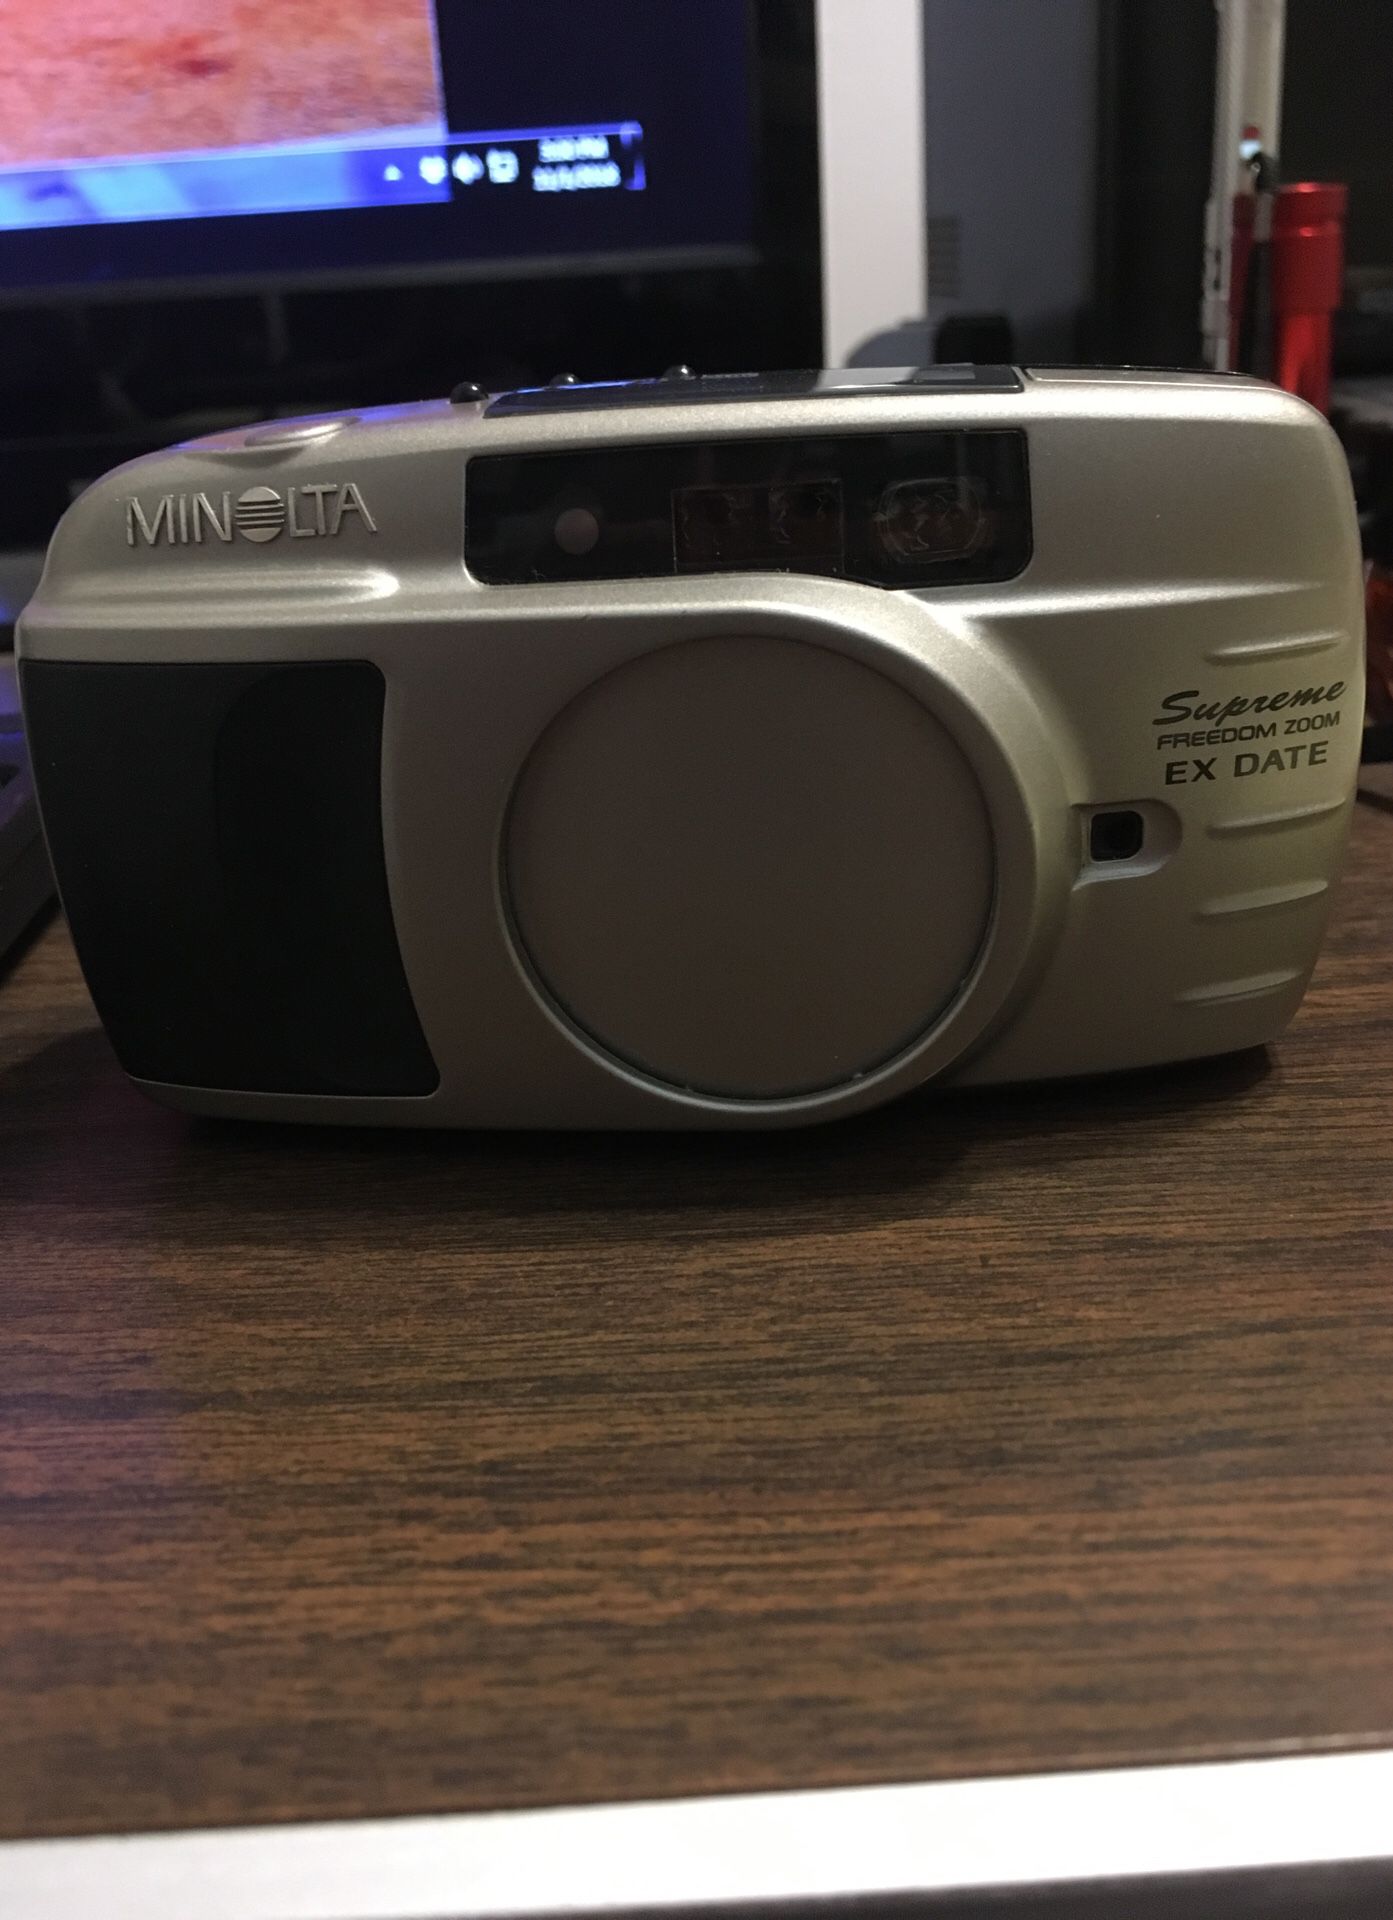 Minolta Supreme Freedom Zoom EX DATE camera